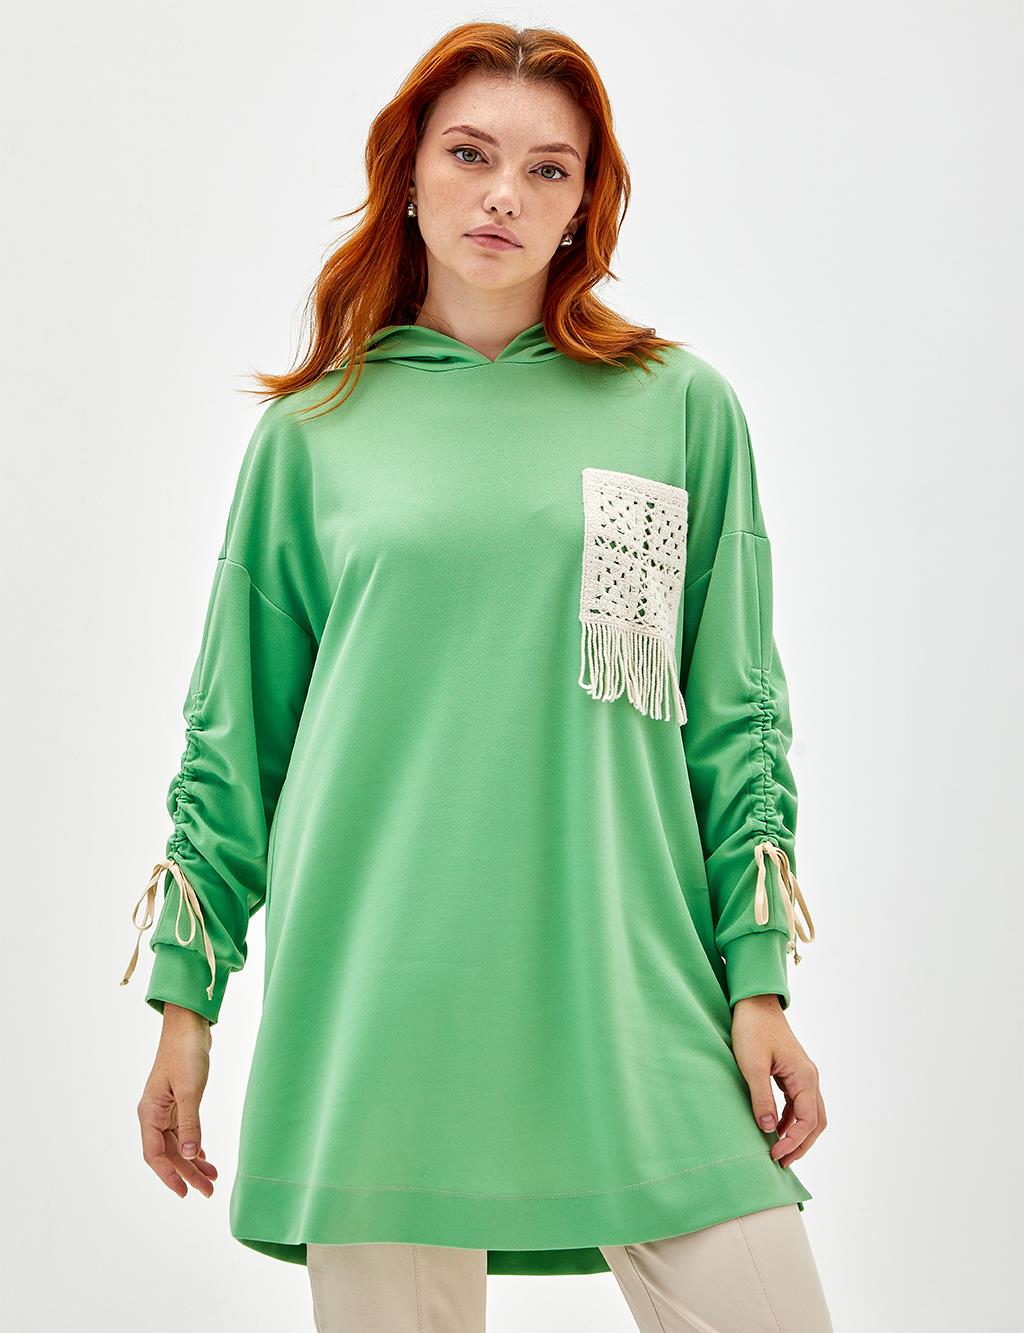 Dantel Cepli Sweatshirt A.Yeşil